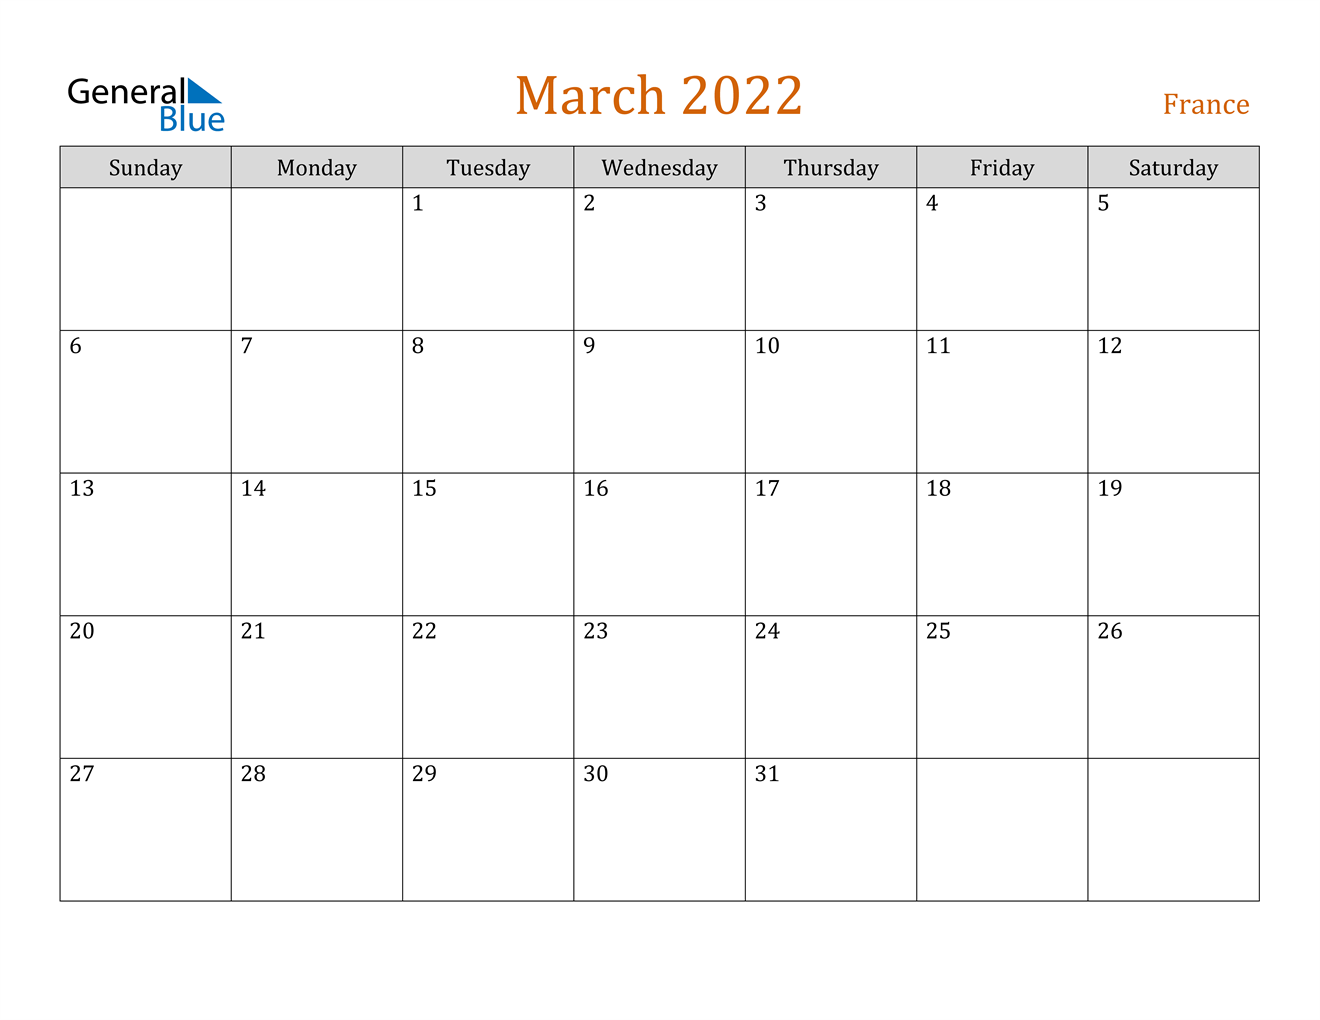 March 2022 Calendar - France